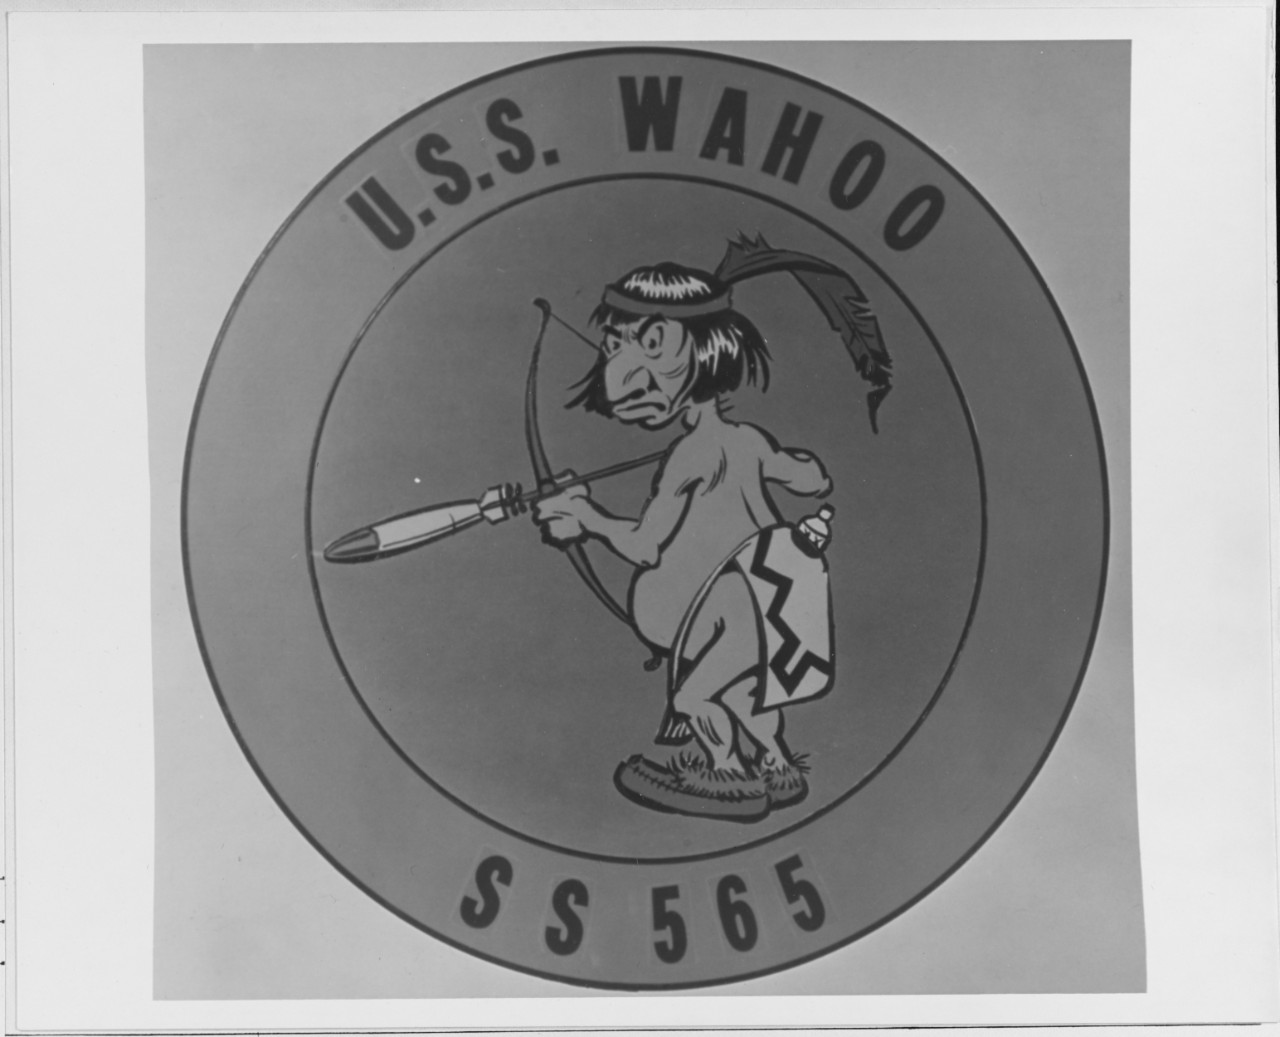 Insignia:  USS WAHOO (SS-565)